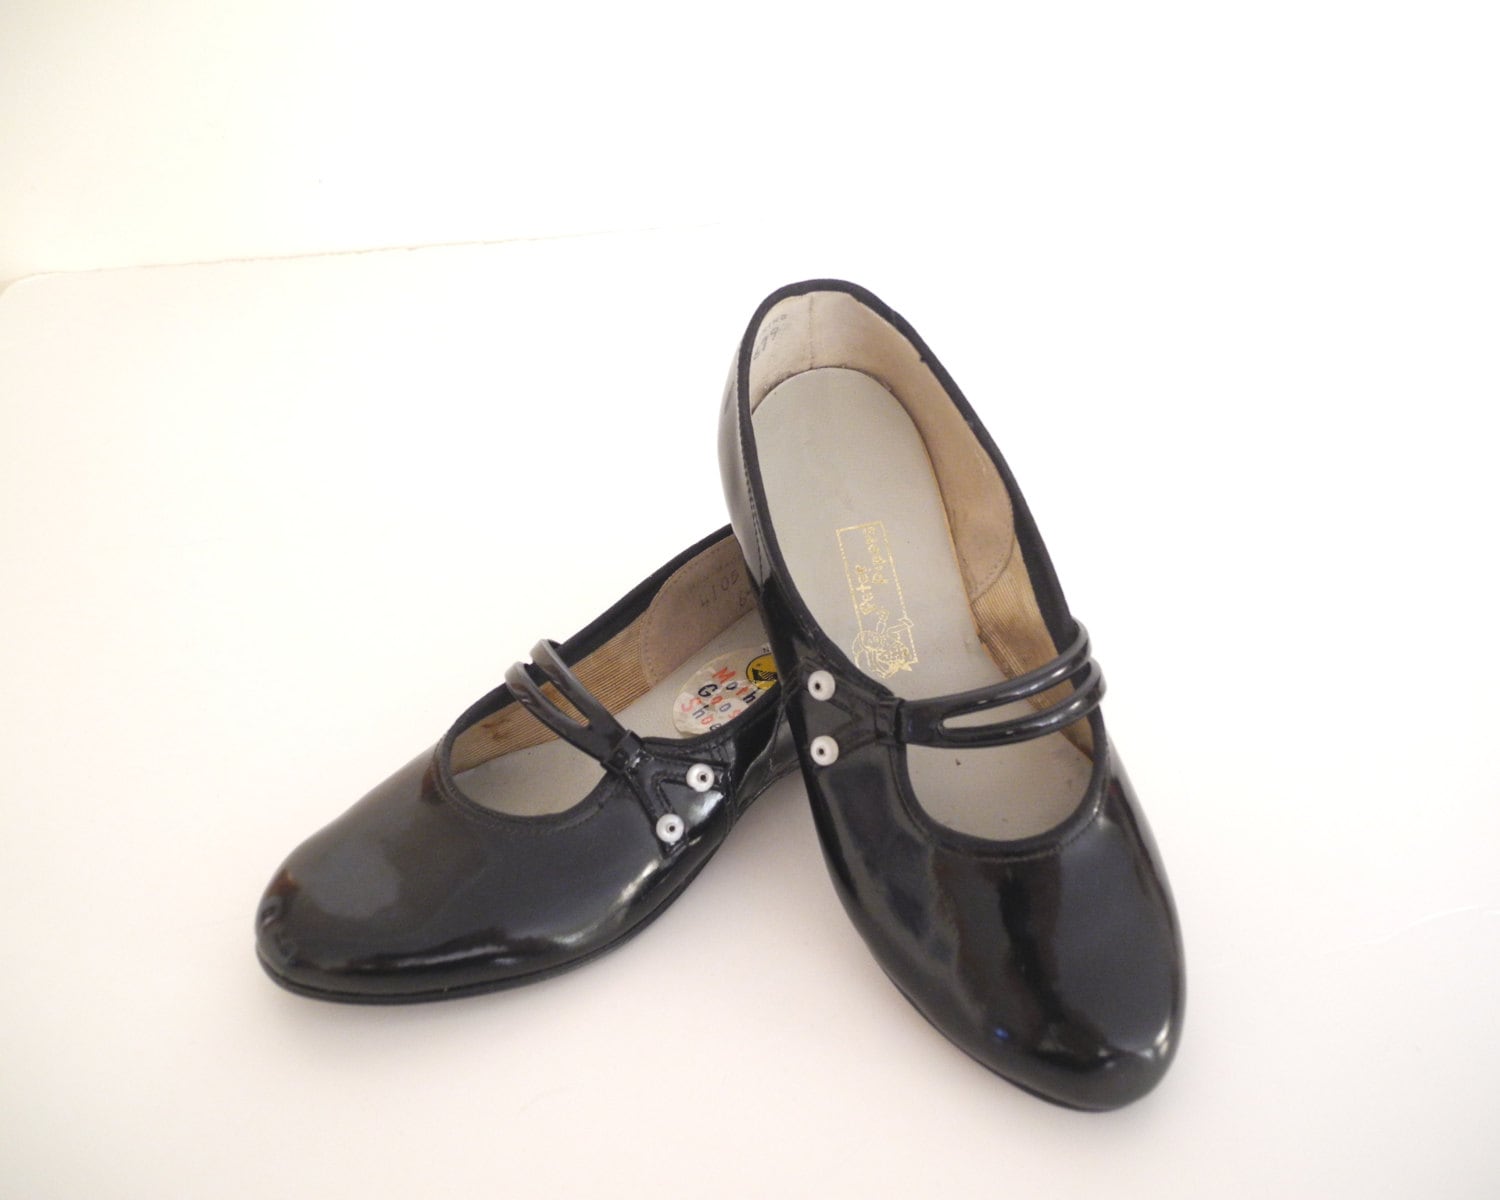 Vintage Girls Shoes 1950's Rare Black Patent Leather